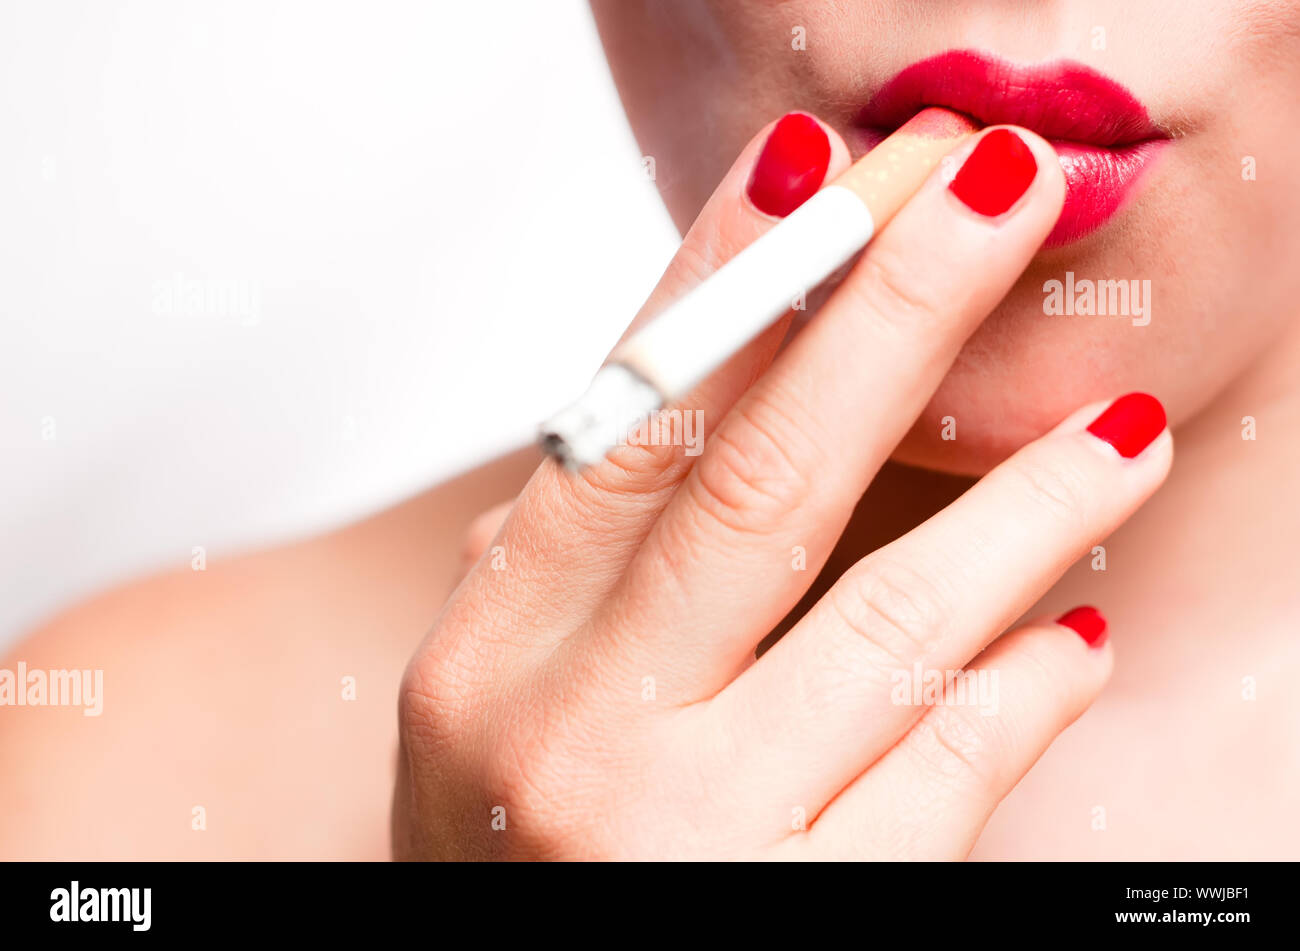 red nails lipstick smoking